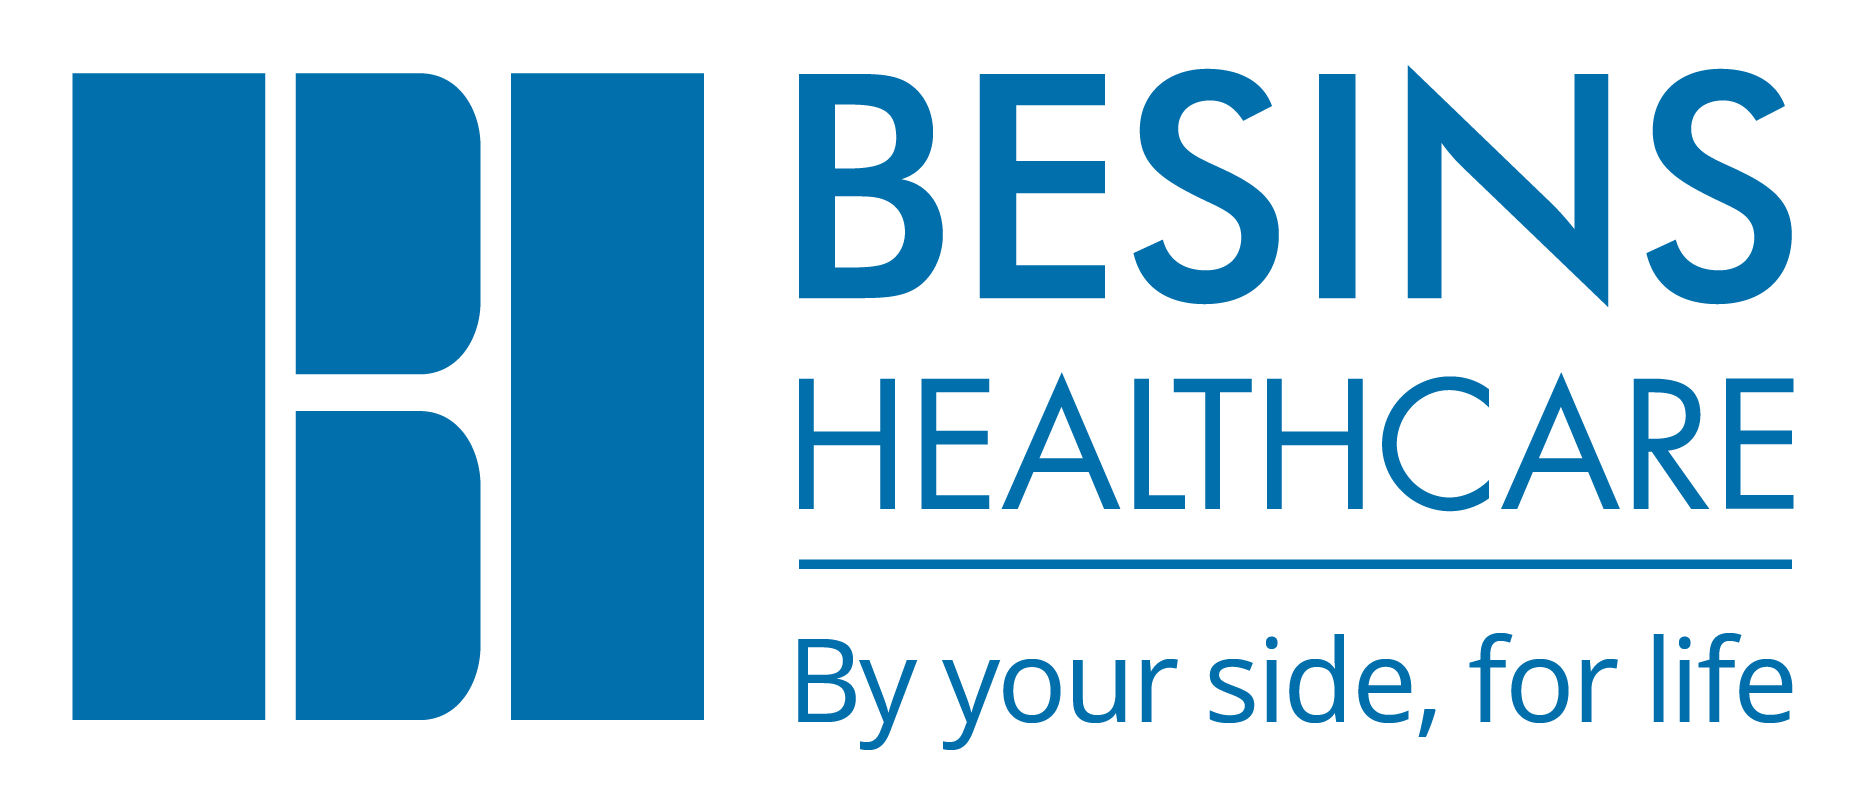 Besins Healthcare logo